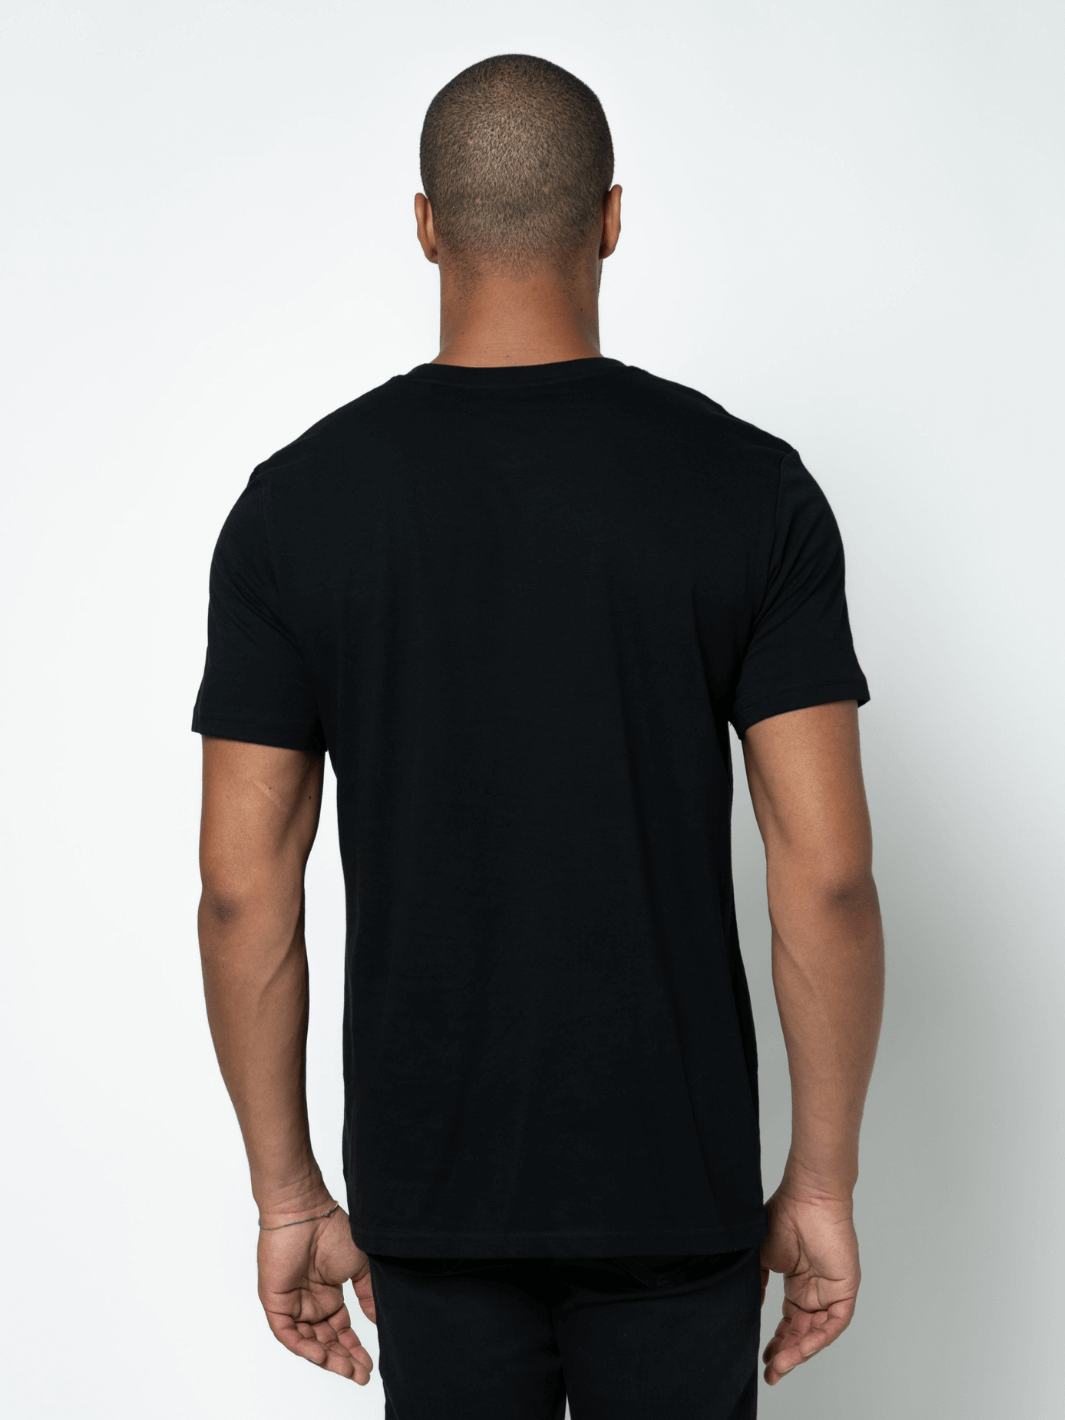 T-shirt nera Limitlex con stampa Guernica.